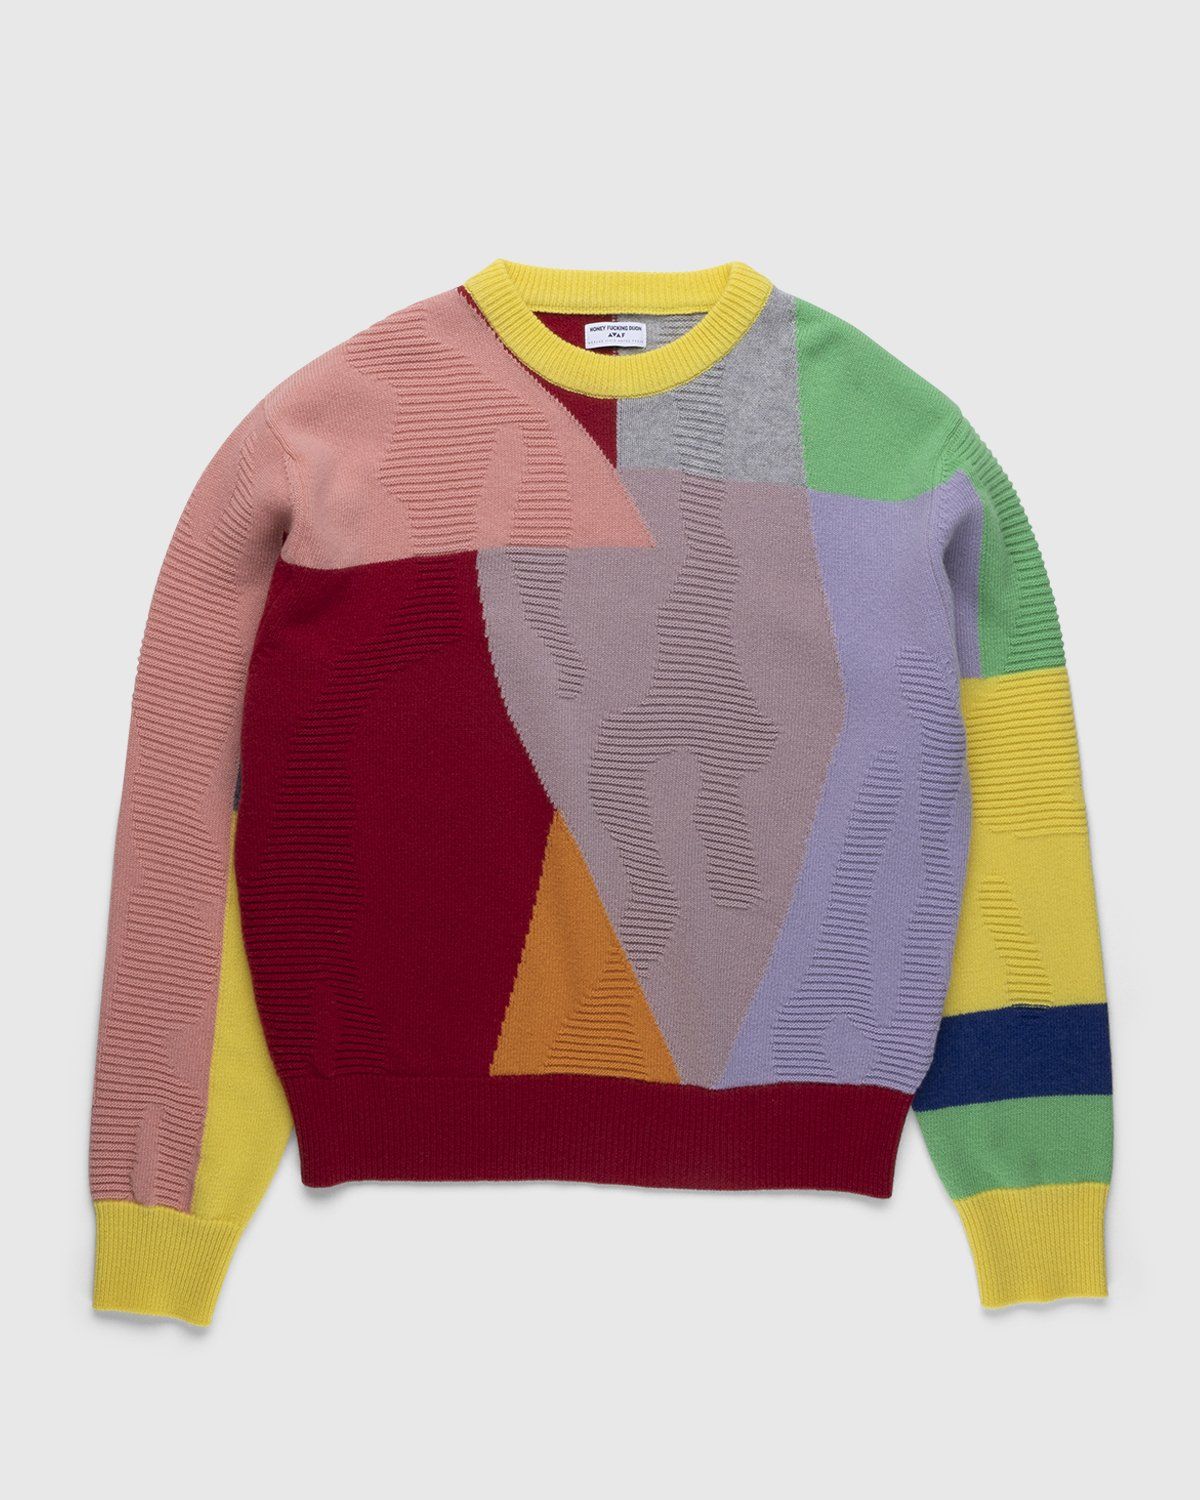 Honey Fucking Dijon x Eli Avaf – Textured Crewneck Knitted Sweater - Crewnecks - Multi - Image 1